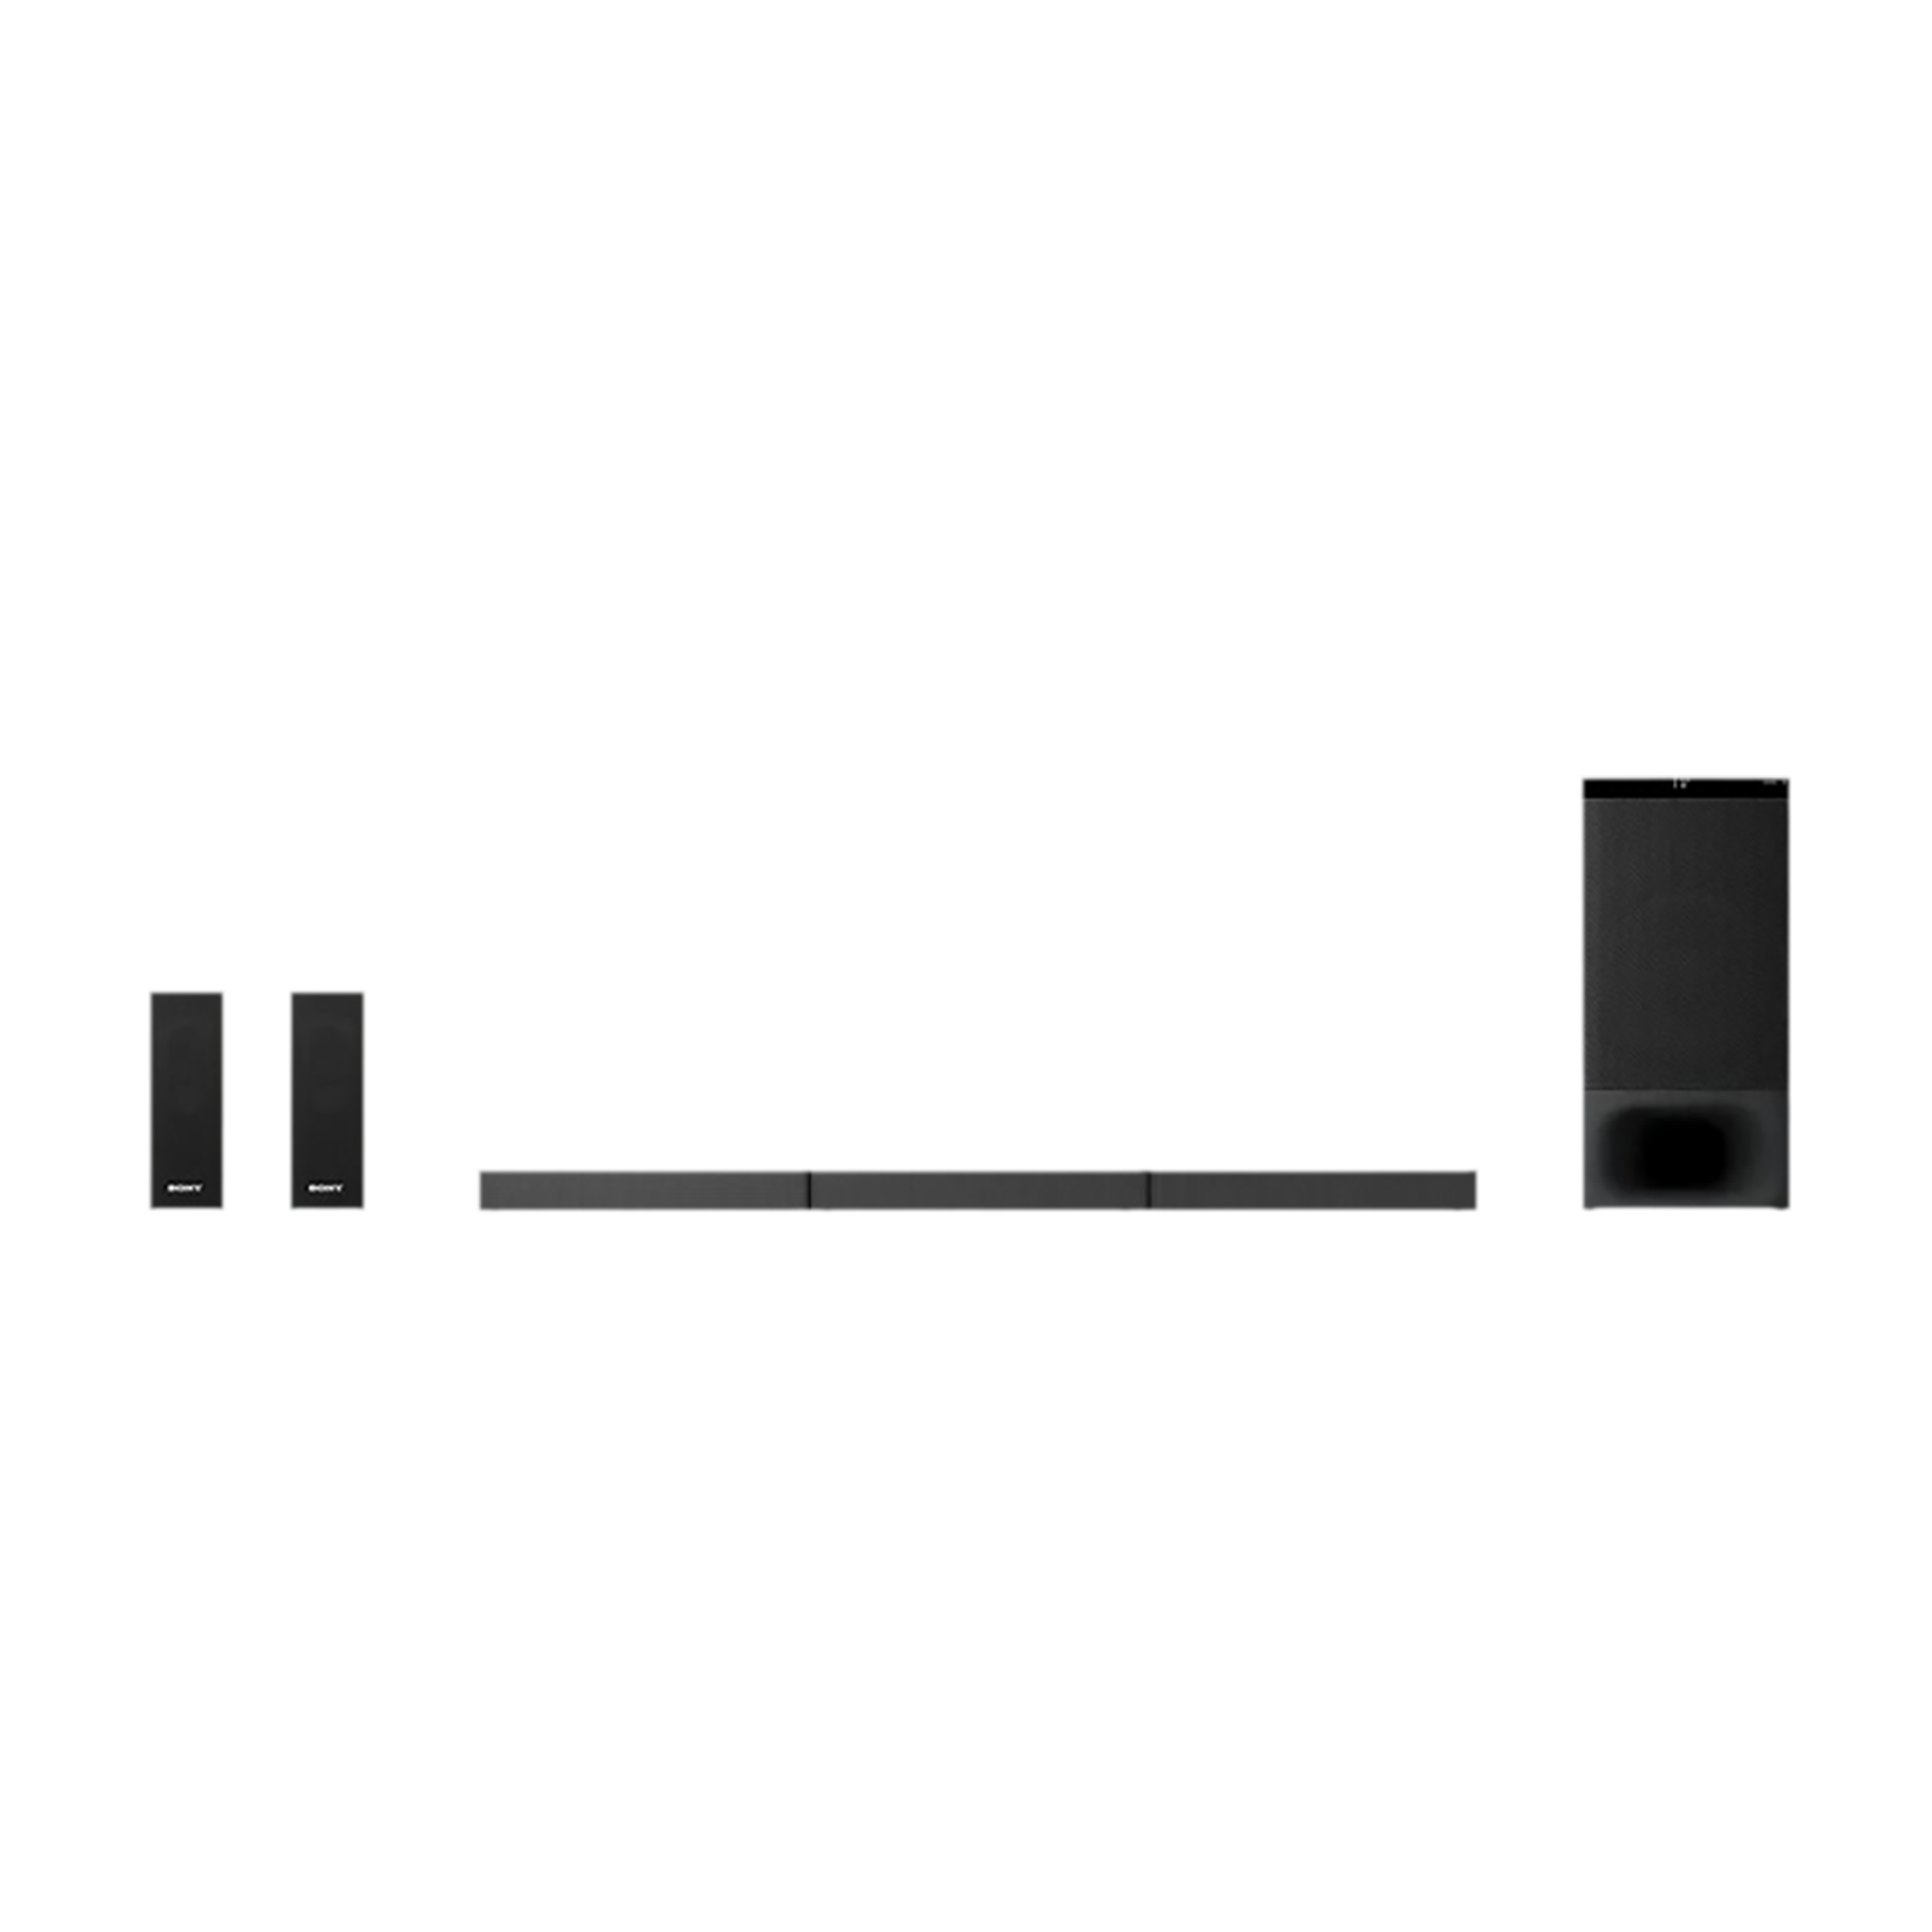 SONY HT-S500RF 1000W Bluetooth Soundbar with Remote (Dolby Digital, 5.1  Channel, Black)